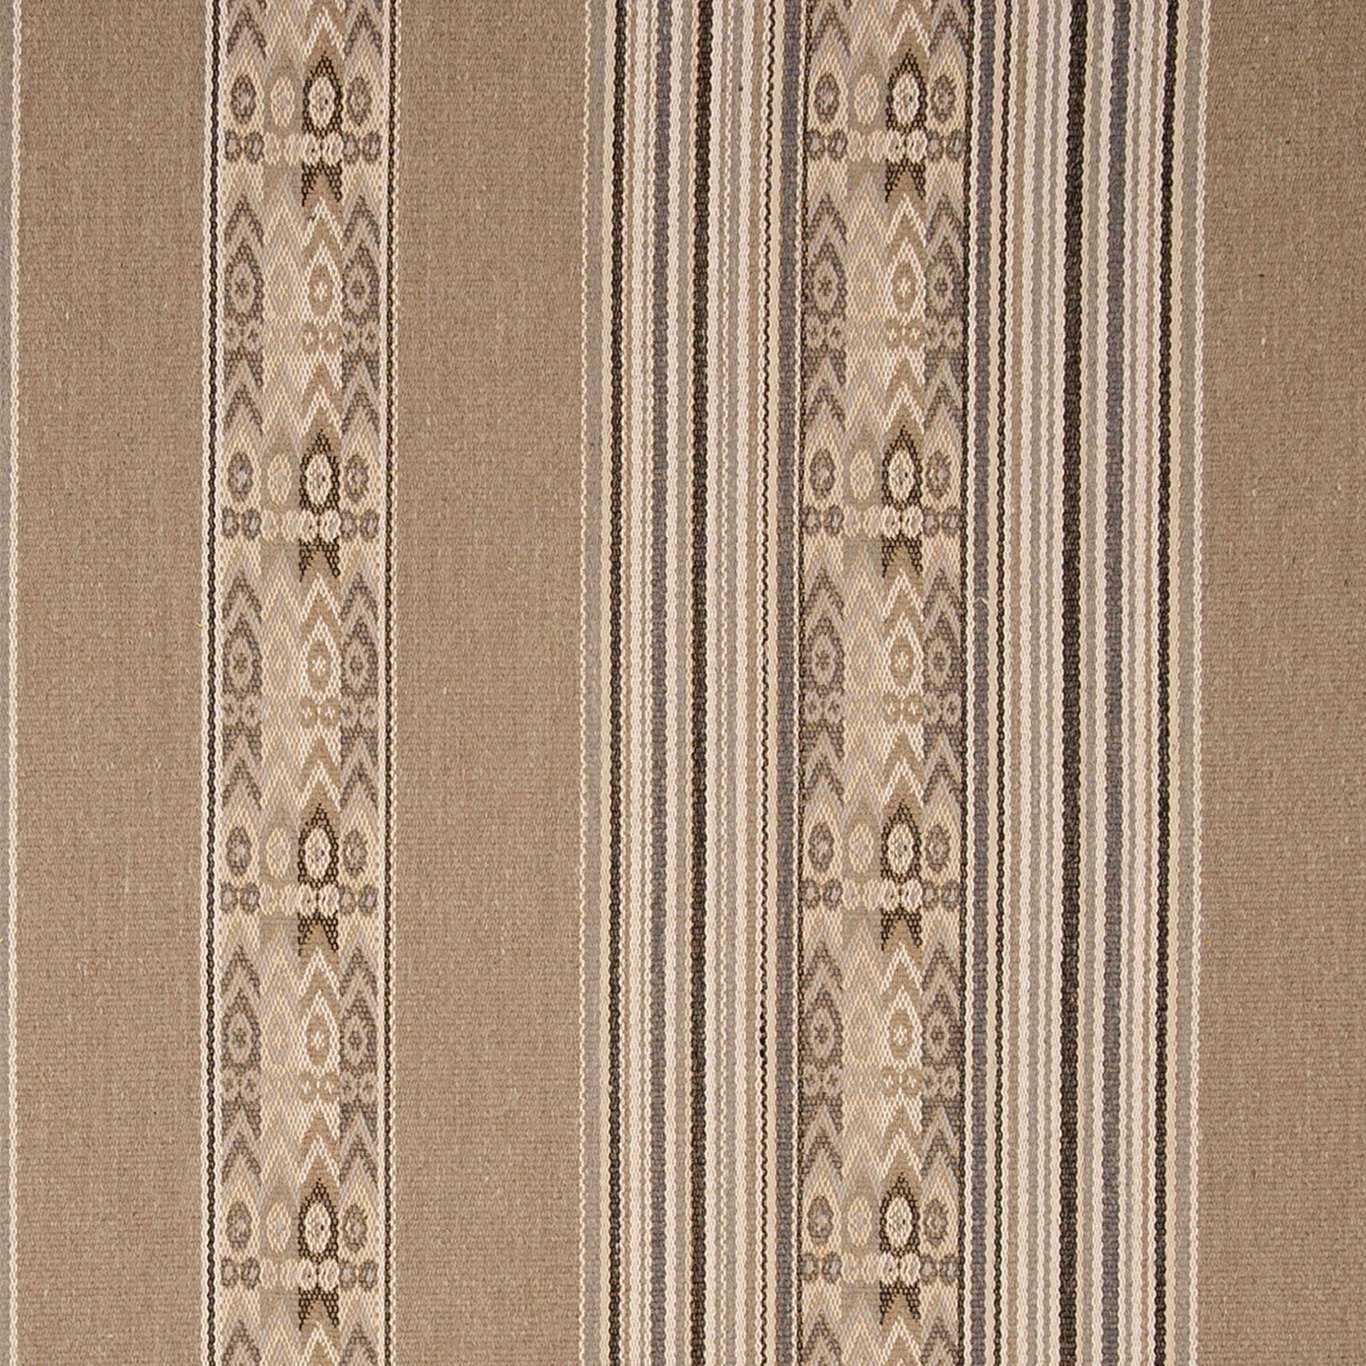 Totem Jute Fabric by CNC